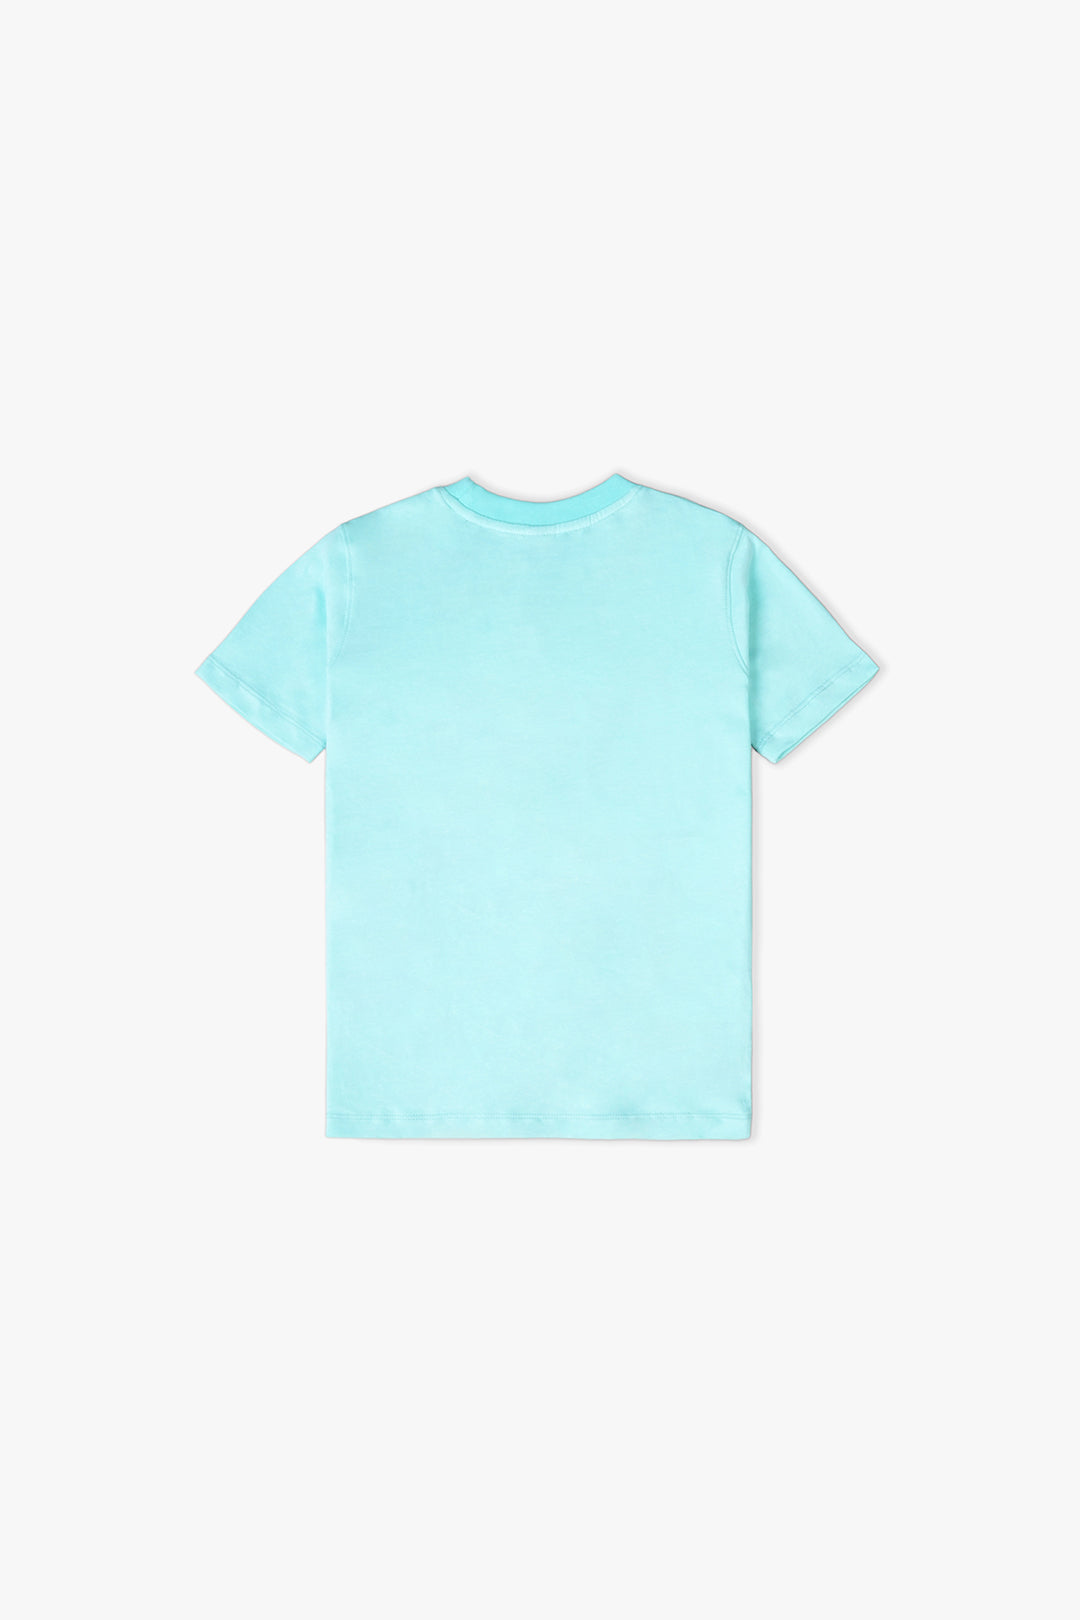 Boy's Augmented Printed Tee Shirt